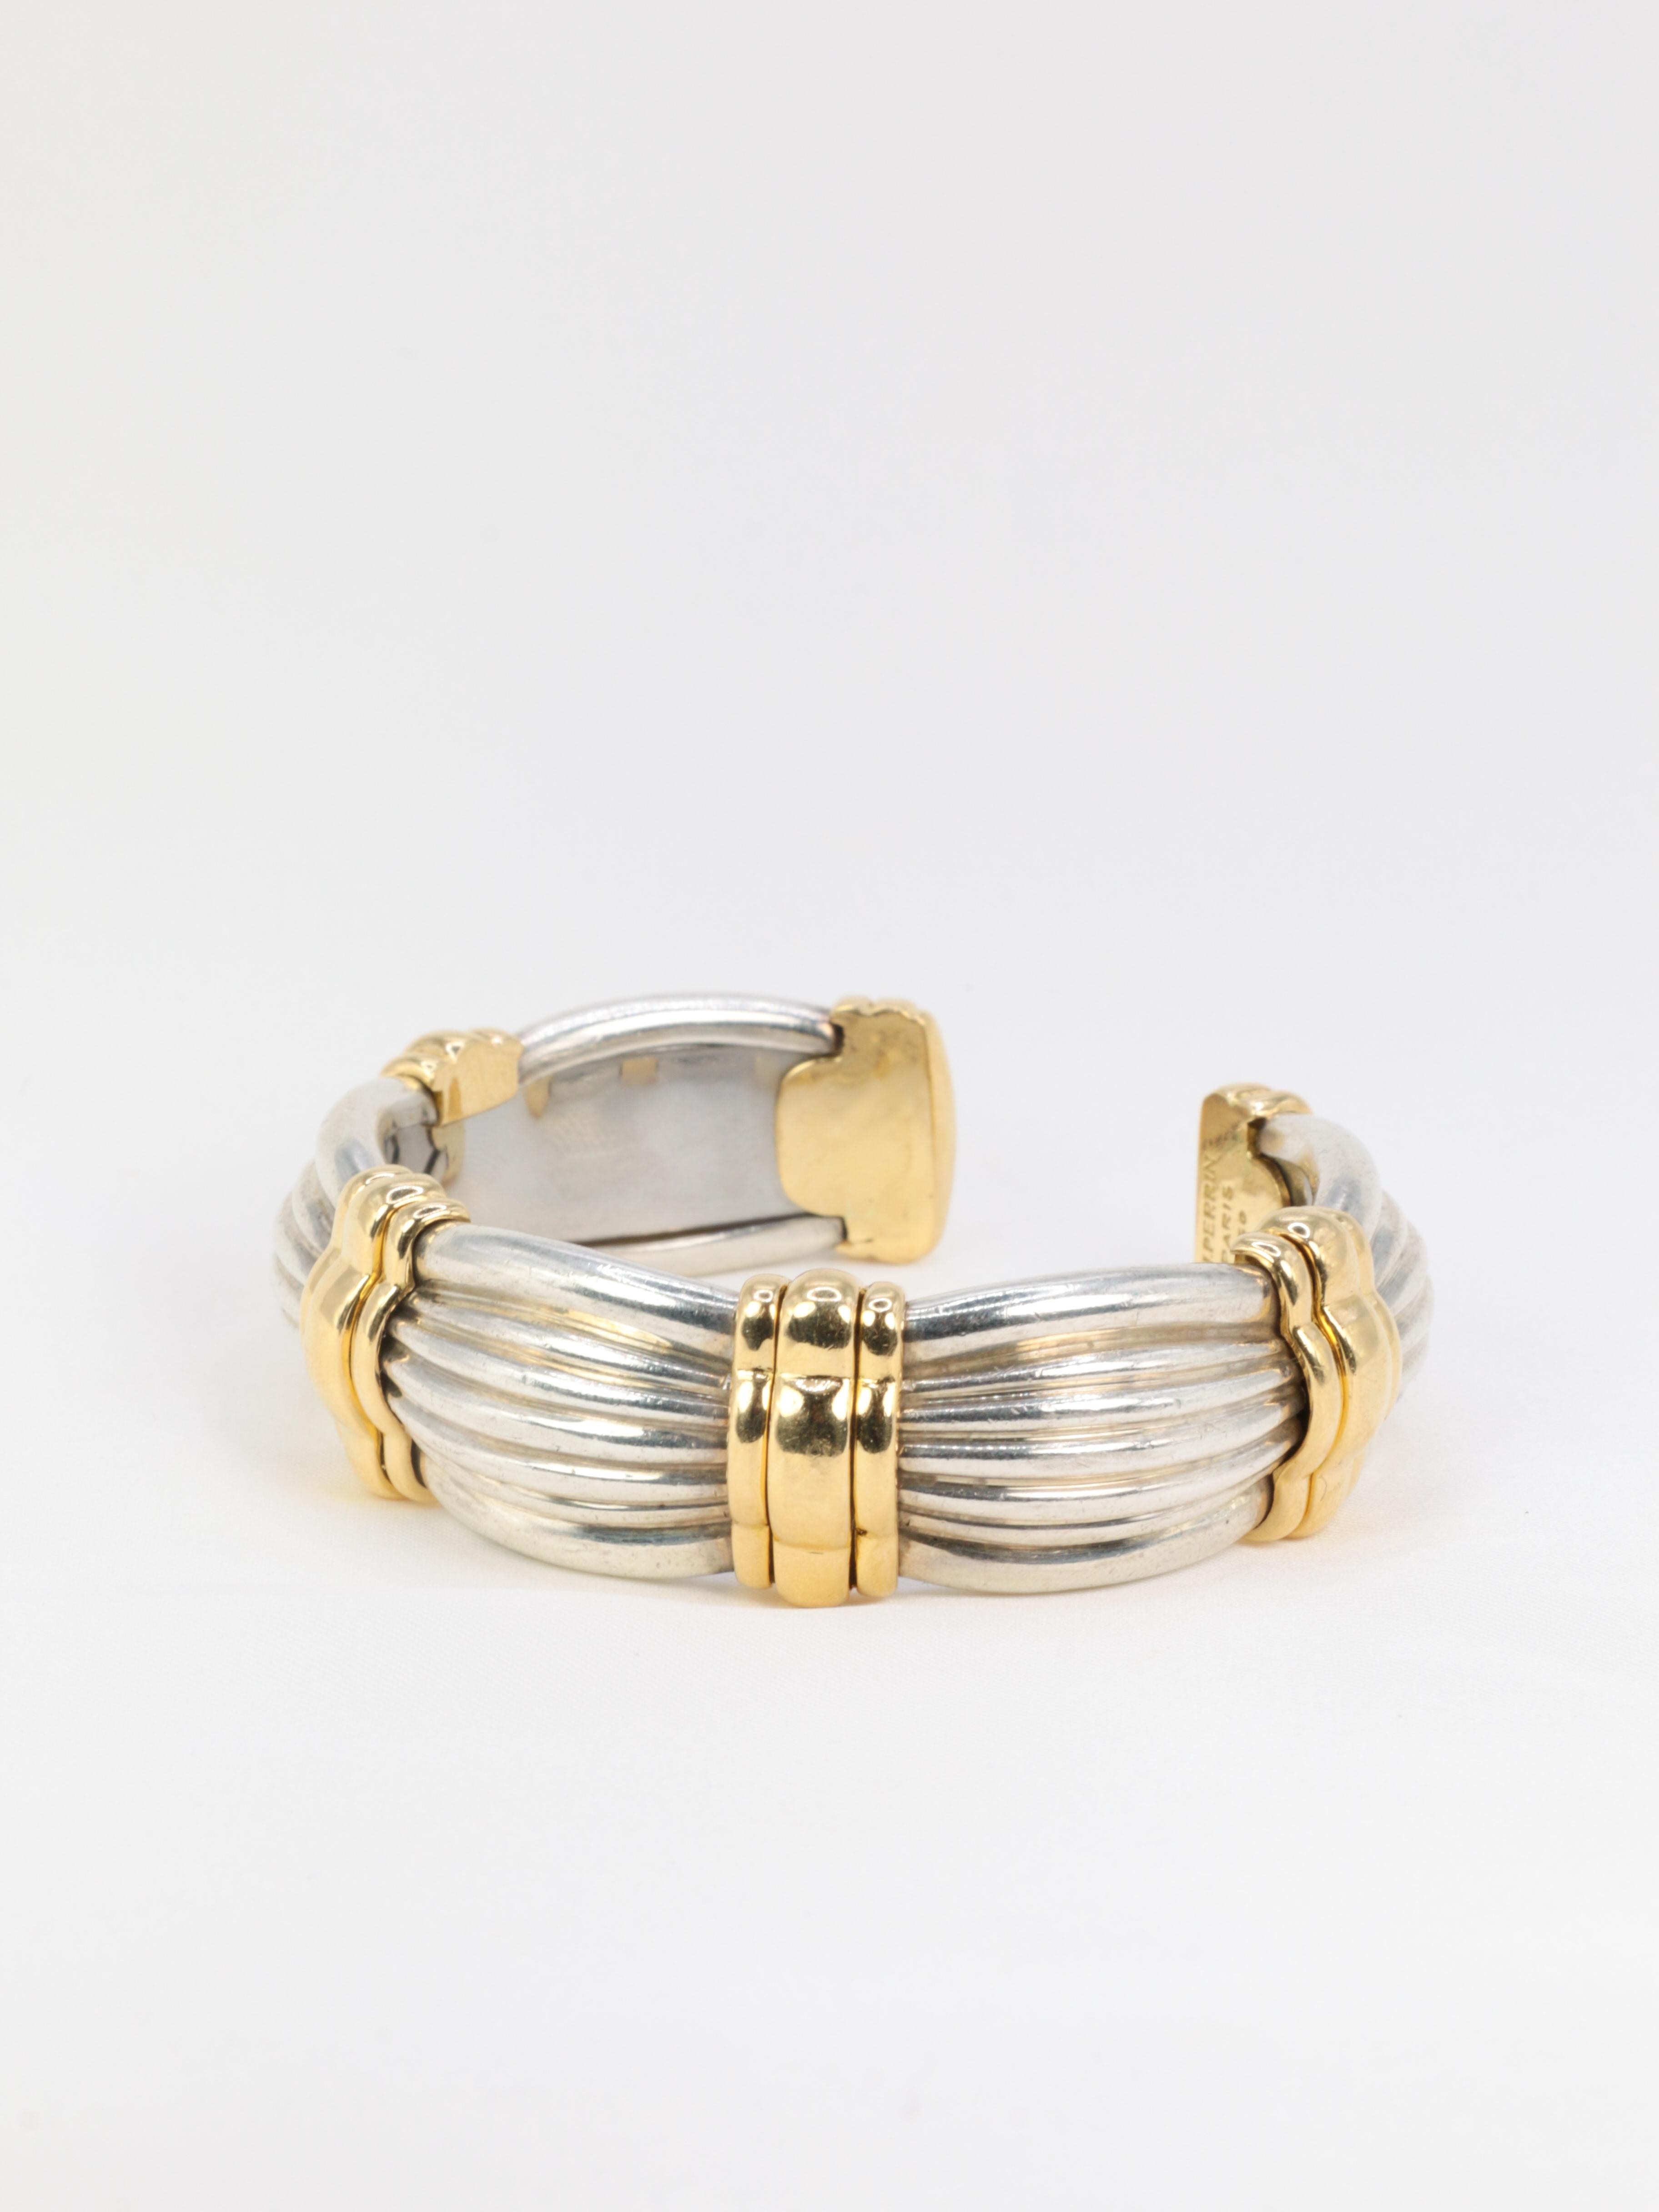 Women's or Men's O.J. Perrin Semi-Rigid Bracelet in Gold and Silver